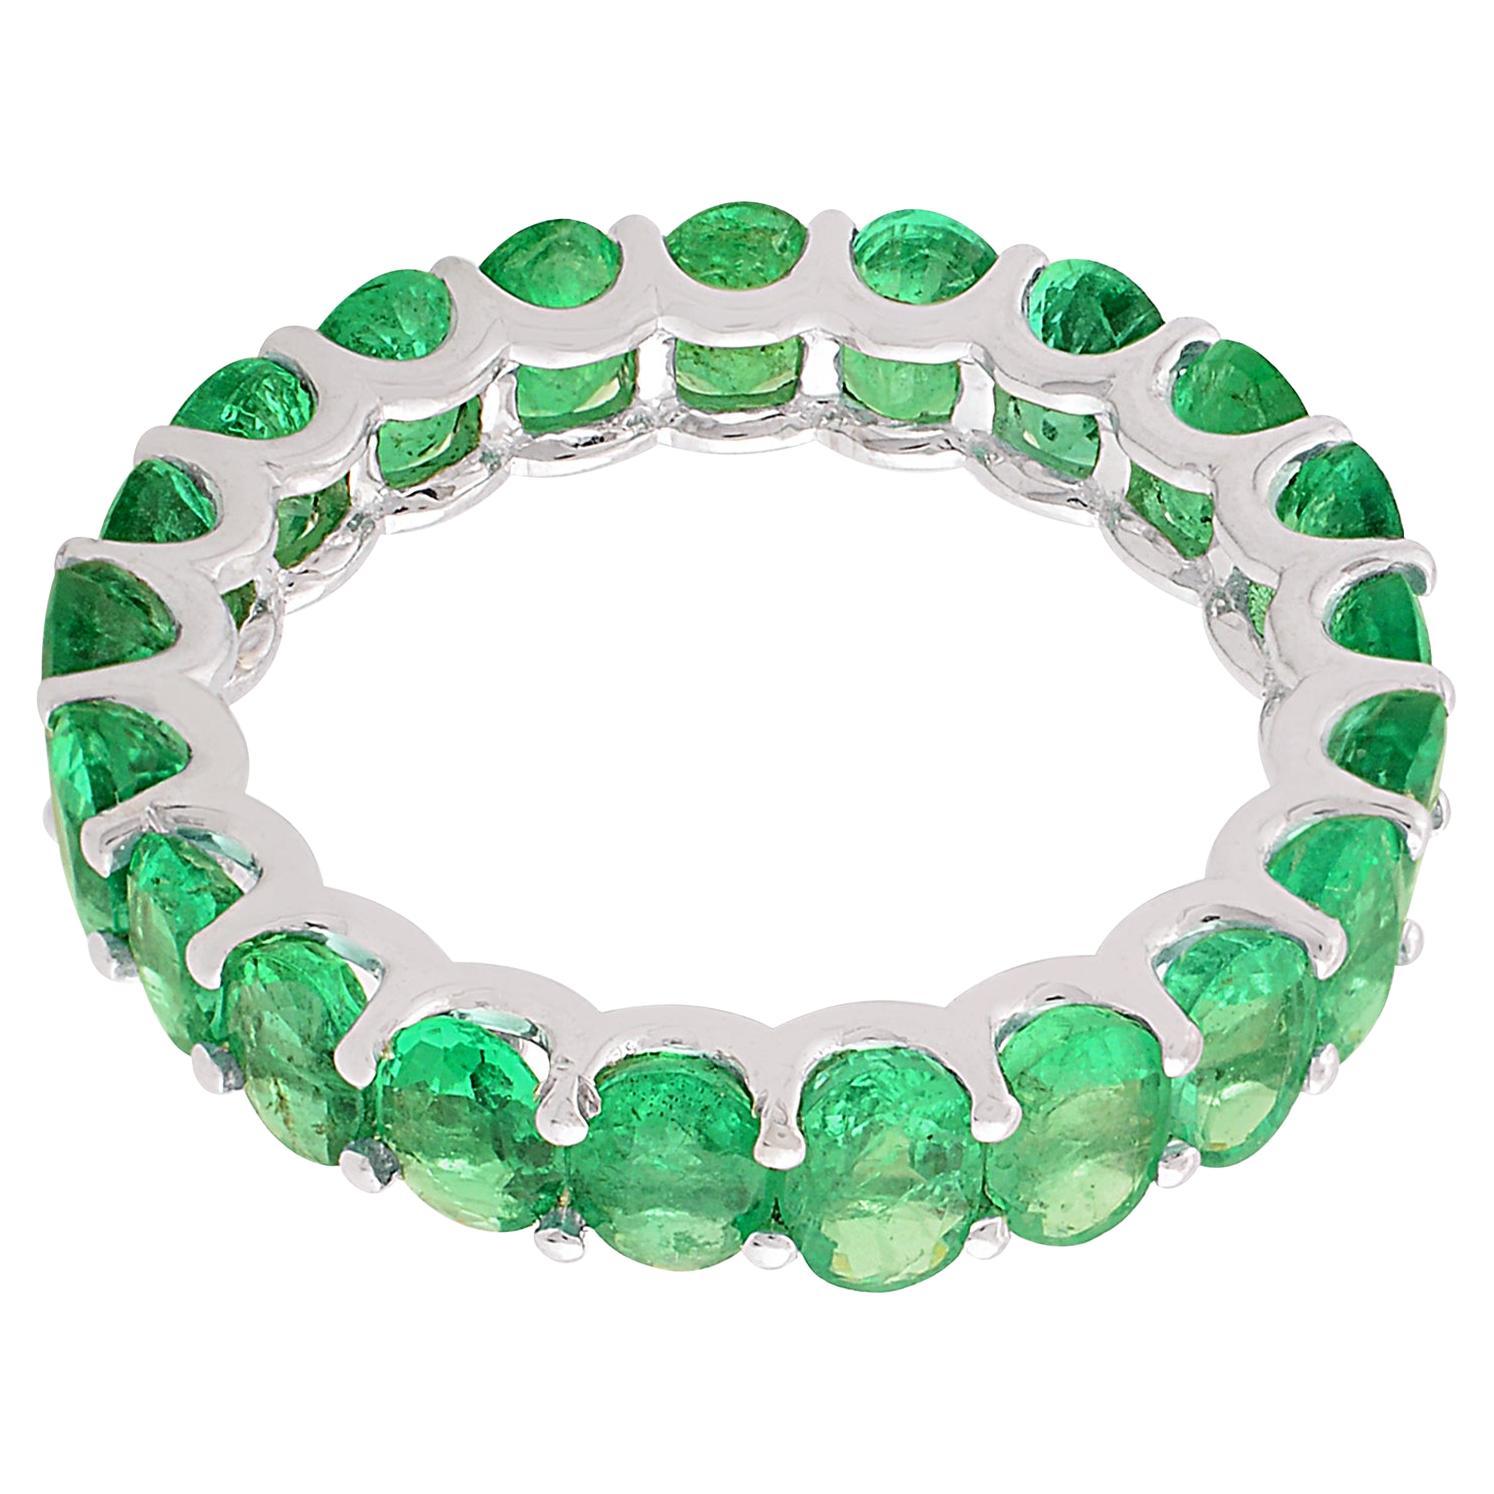 4.40 Carat Zambian Emerald Gemstone Band Ring 18k White Gold Handmade Jewelry For Sale